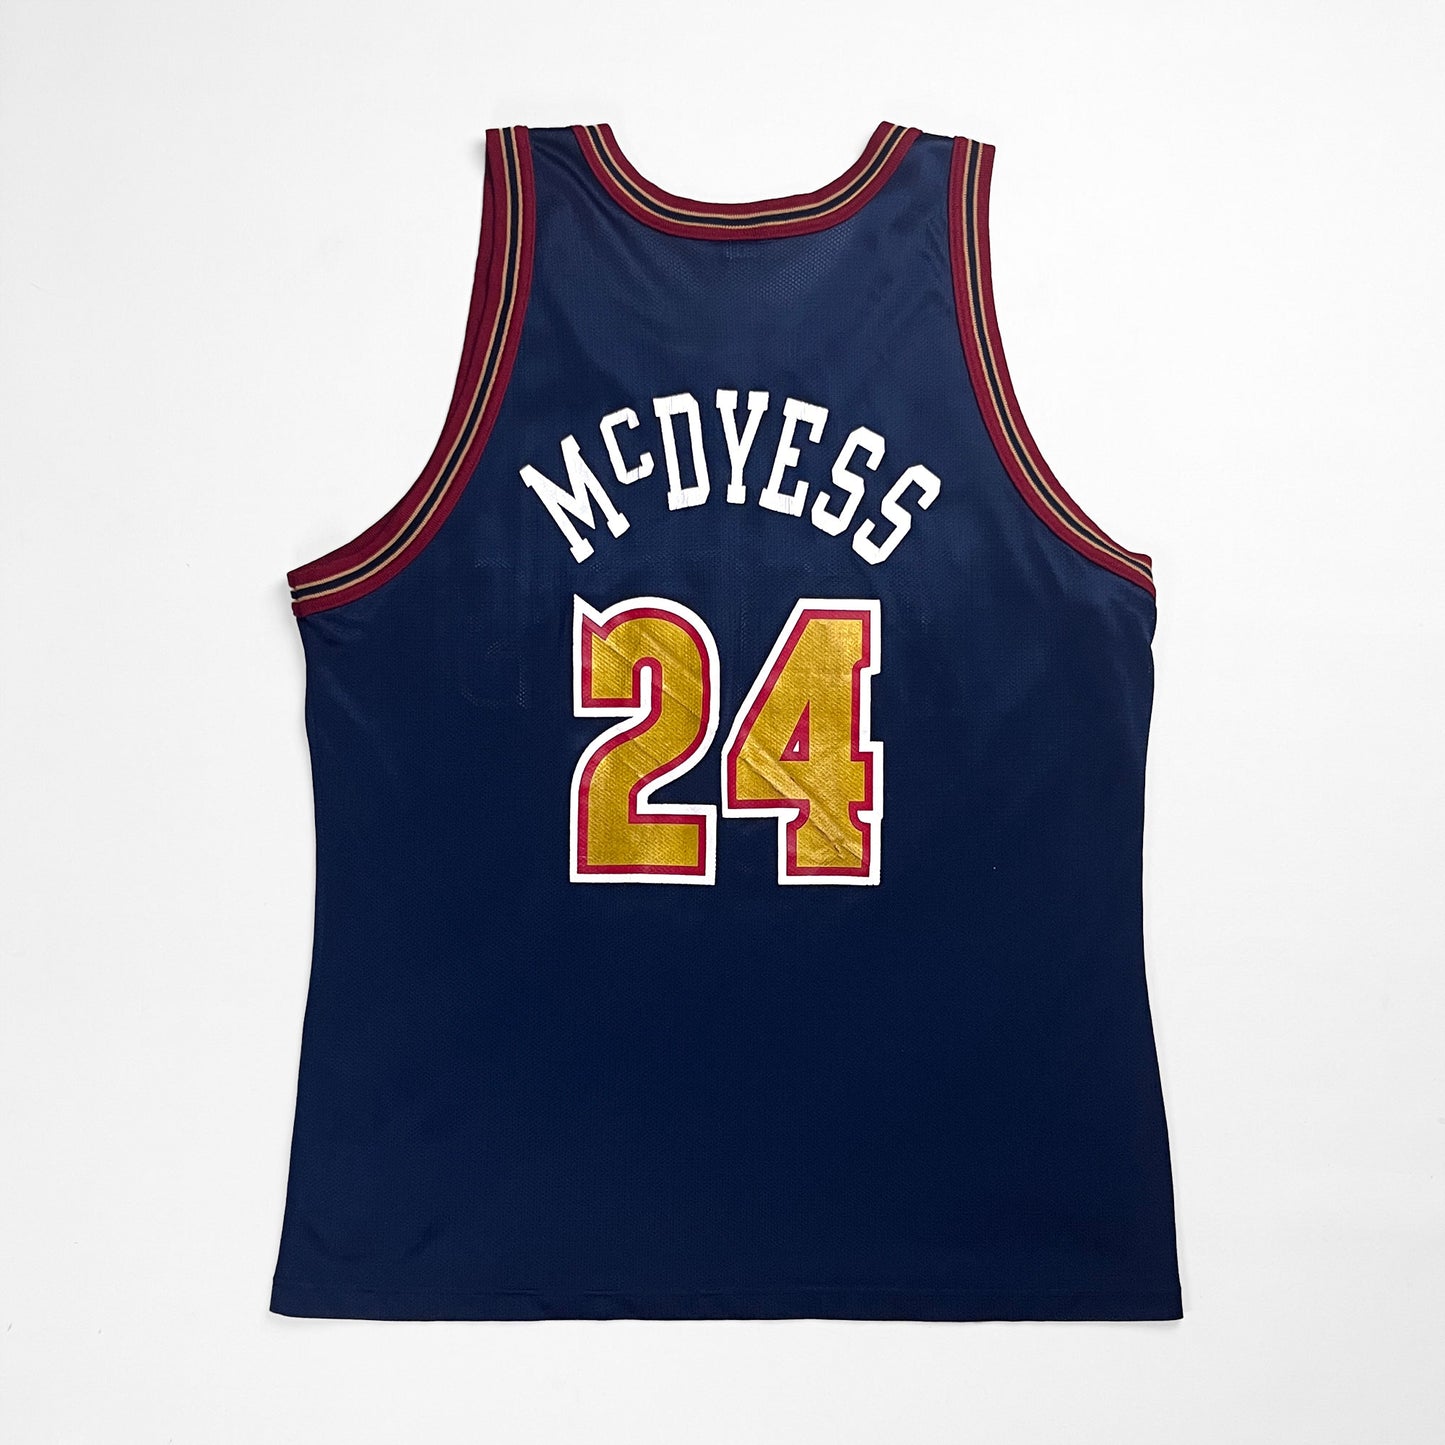 Denver Nuggets - Antonio McDyess - Größe XL / US48 - Champion - NBA Trikot